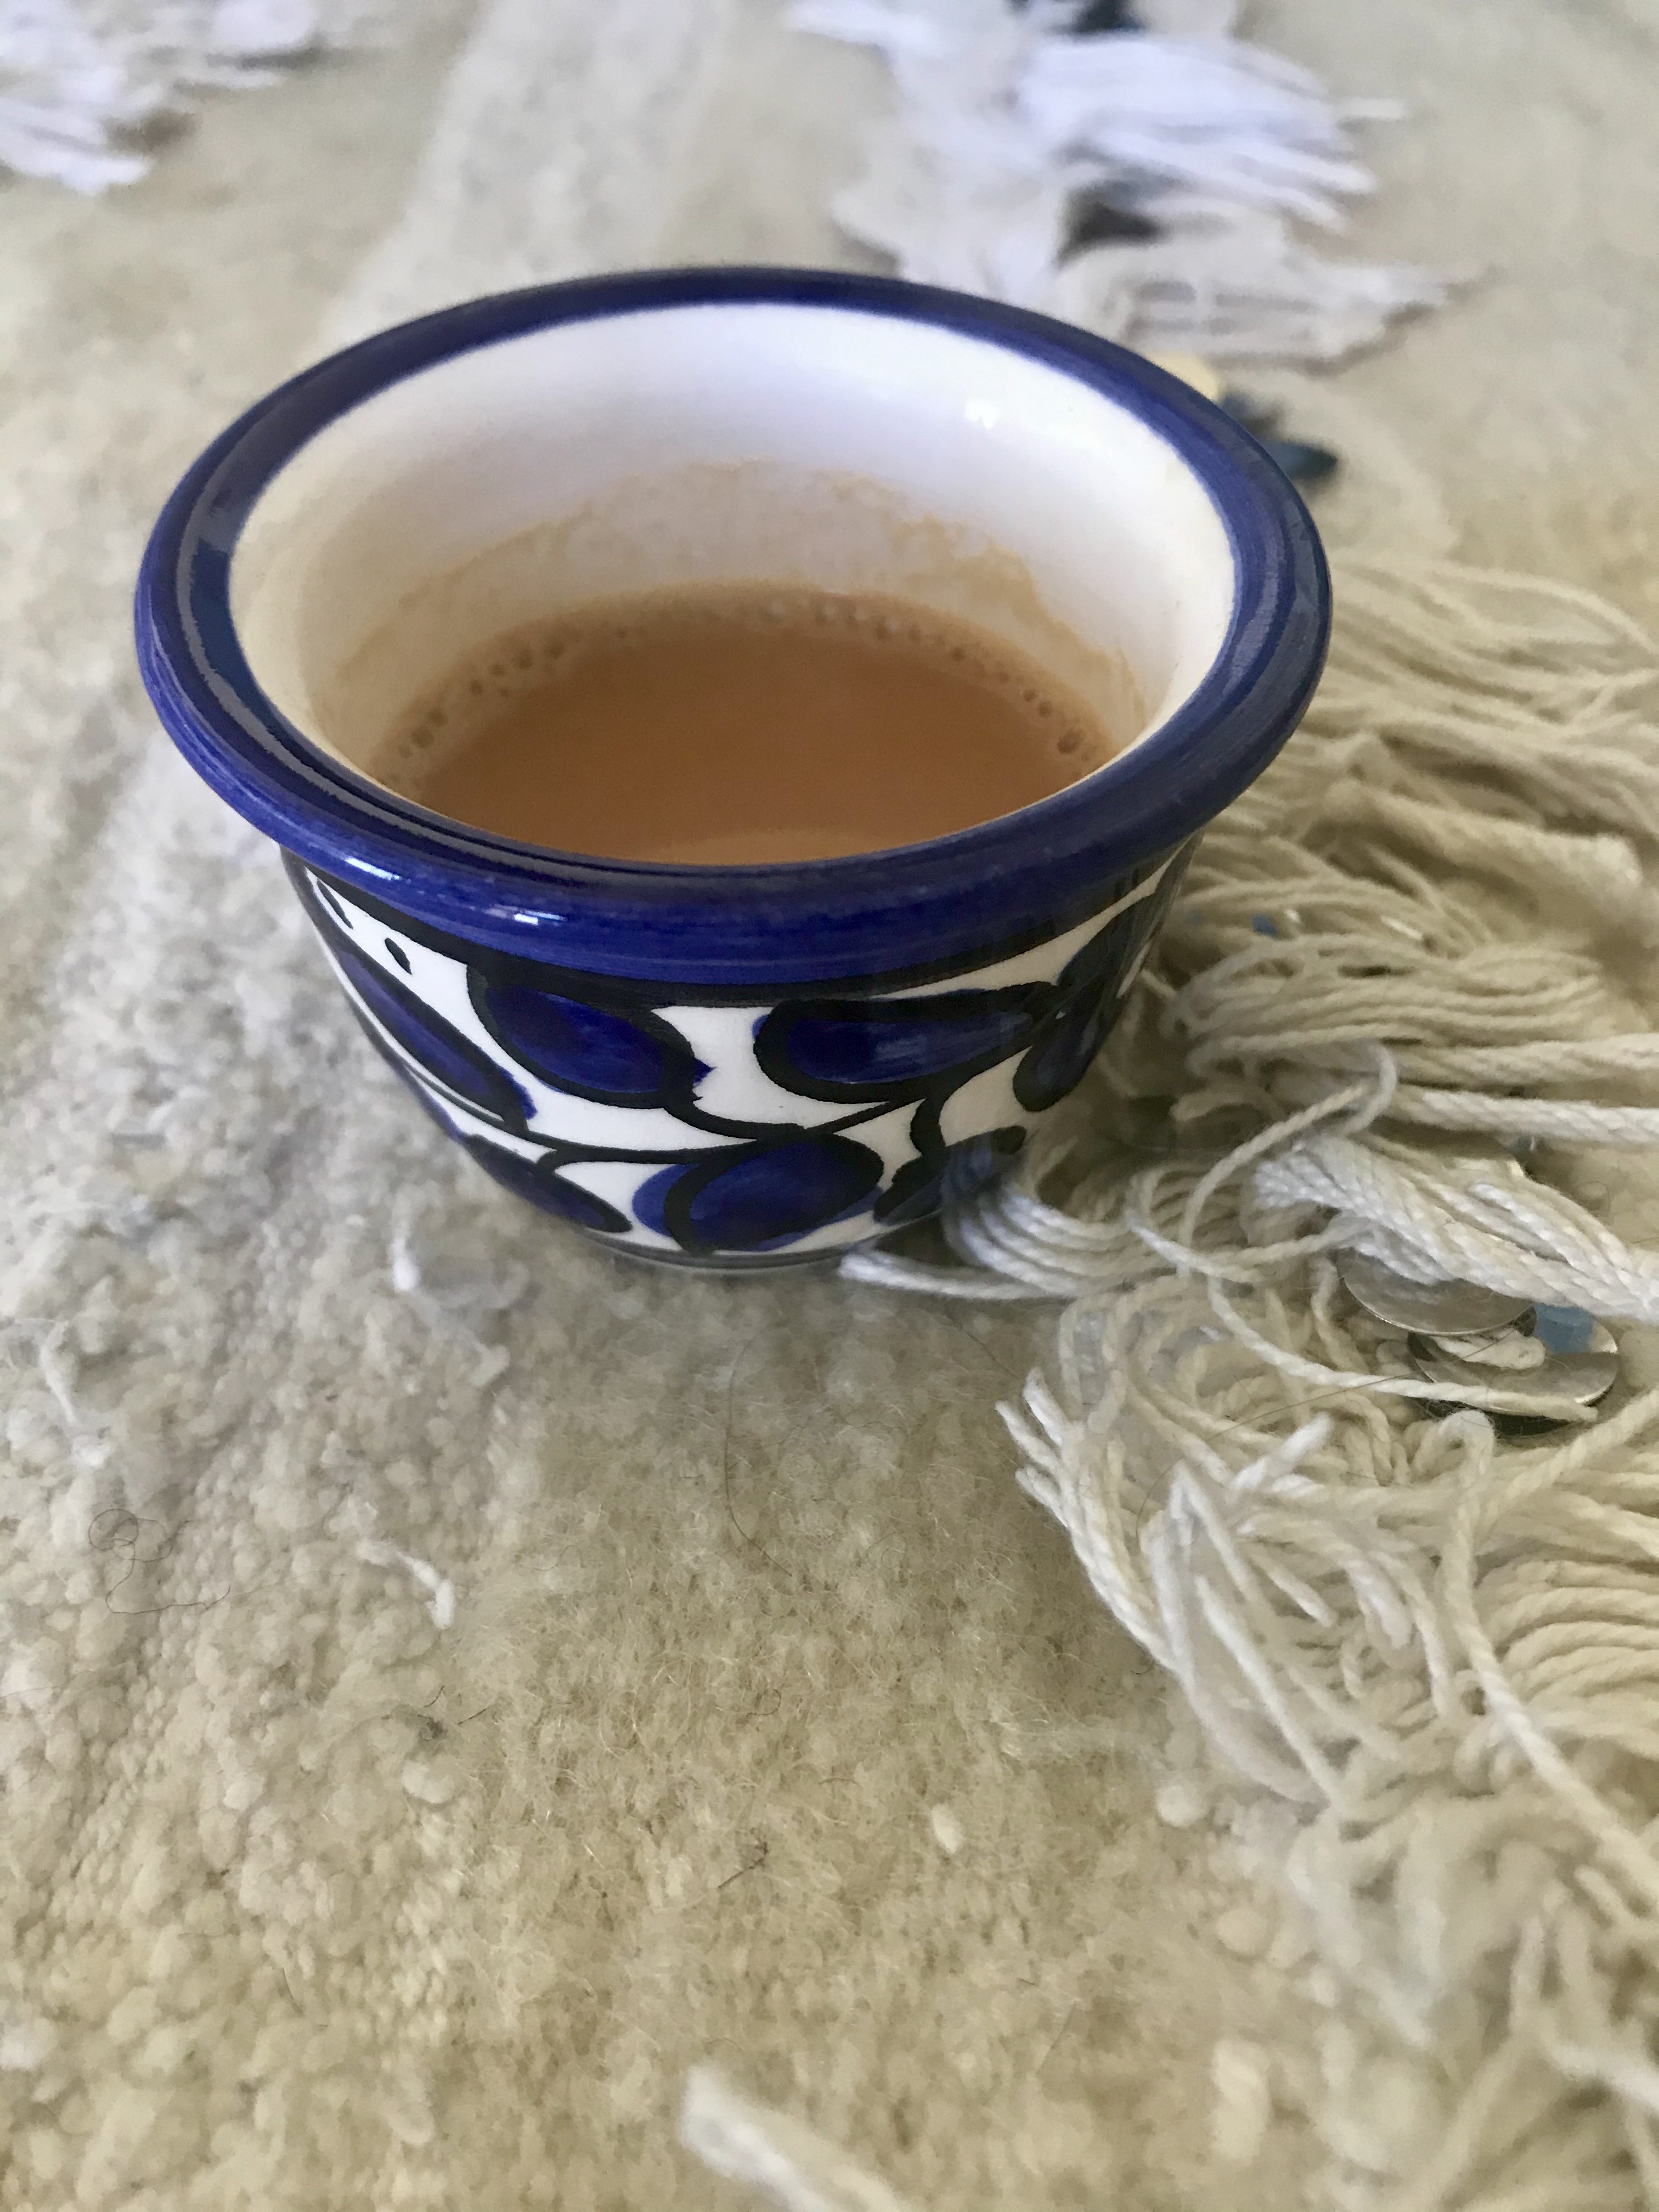 karak tea Oman Qatar UAE recipe